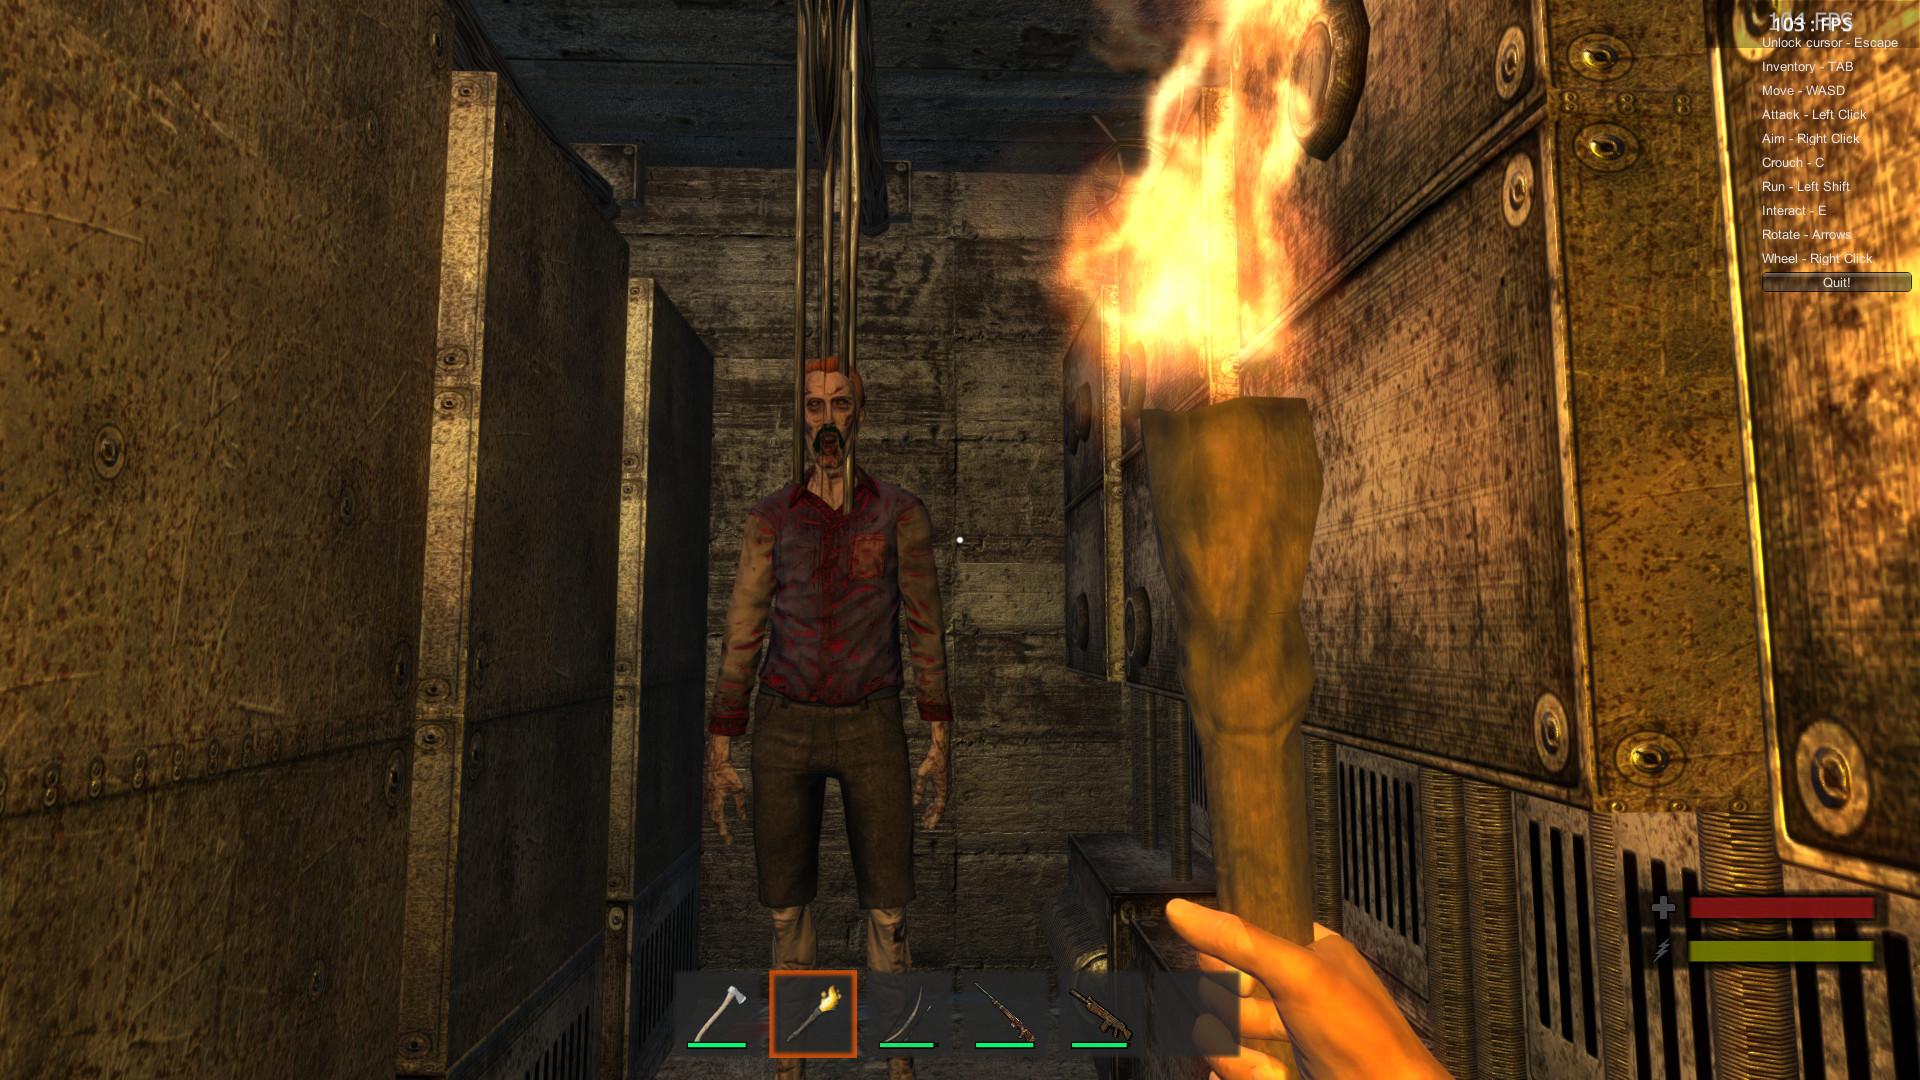 Screenshot №5 from game Bunker 58